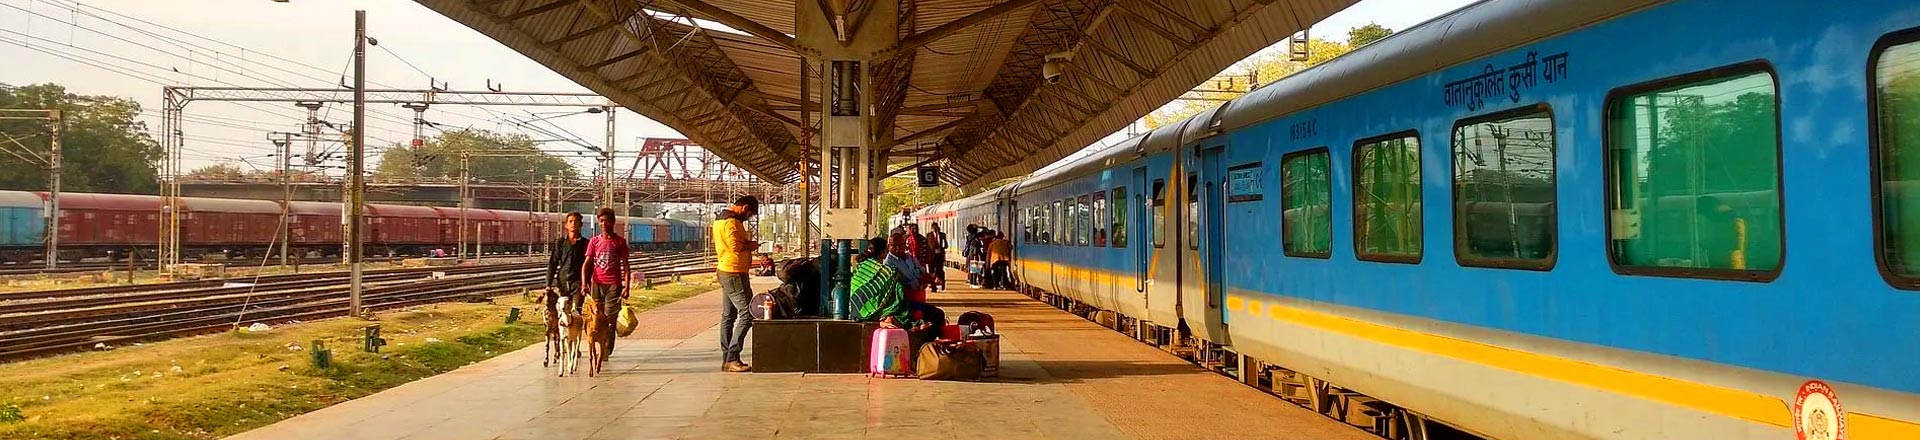 One Day Agra Tour By Gatiman Express Train